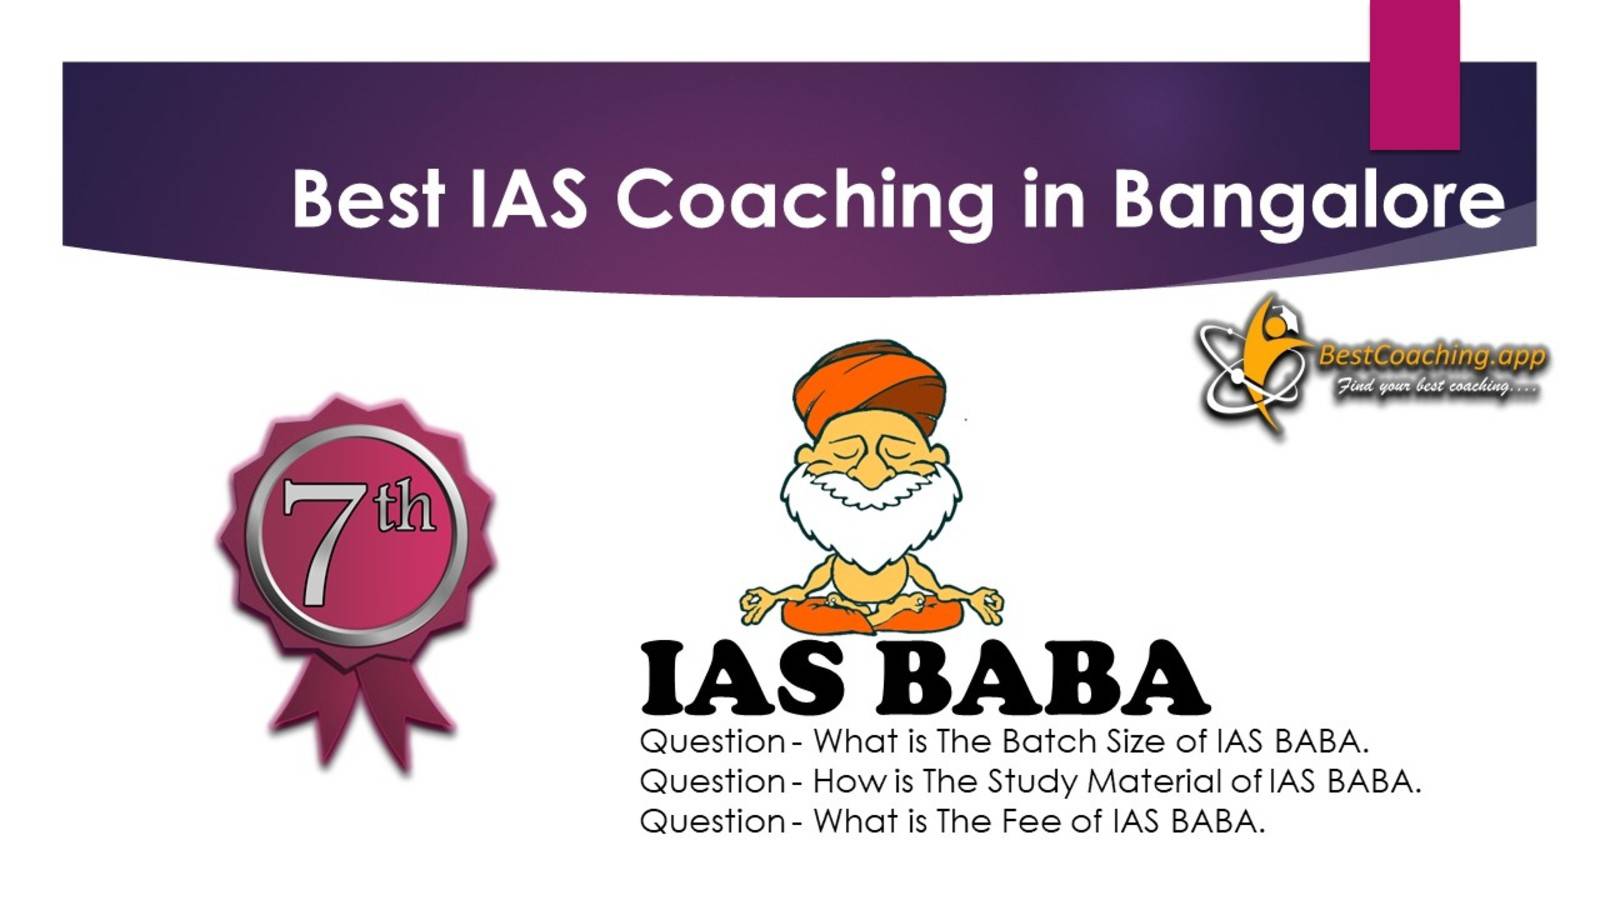 Best IAS Coaching in Bangalore Rank 7th